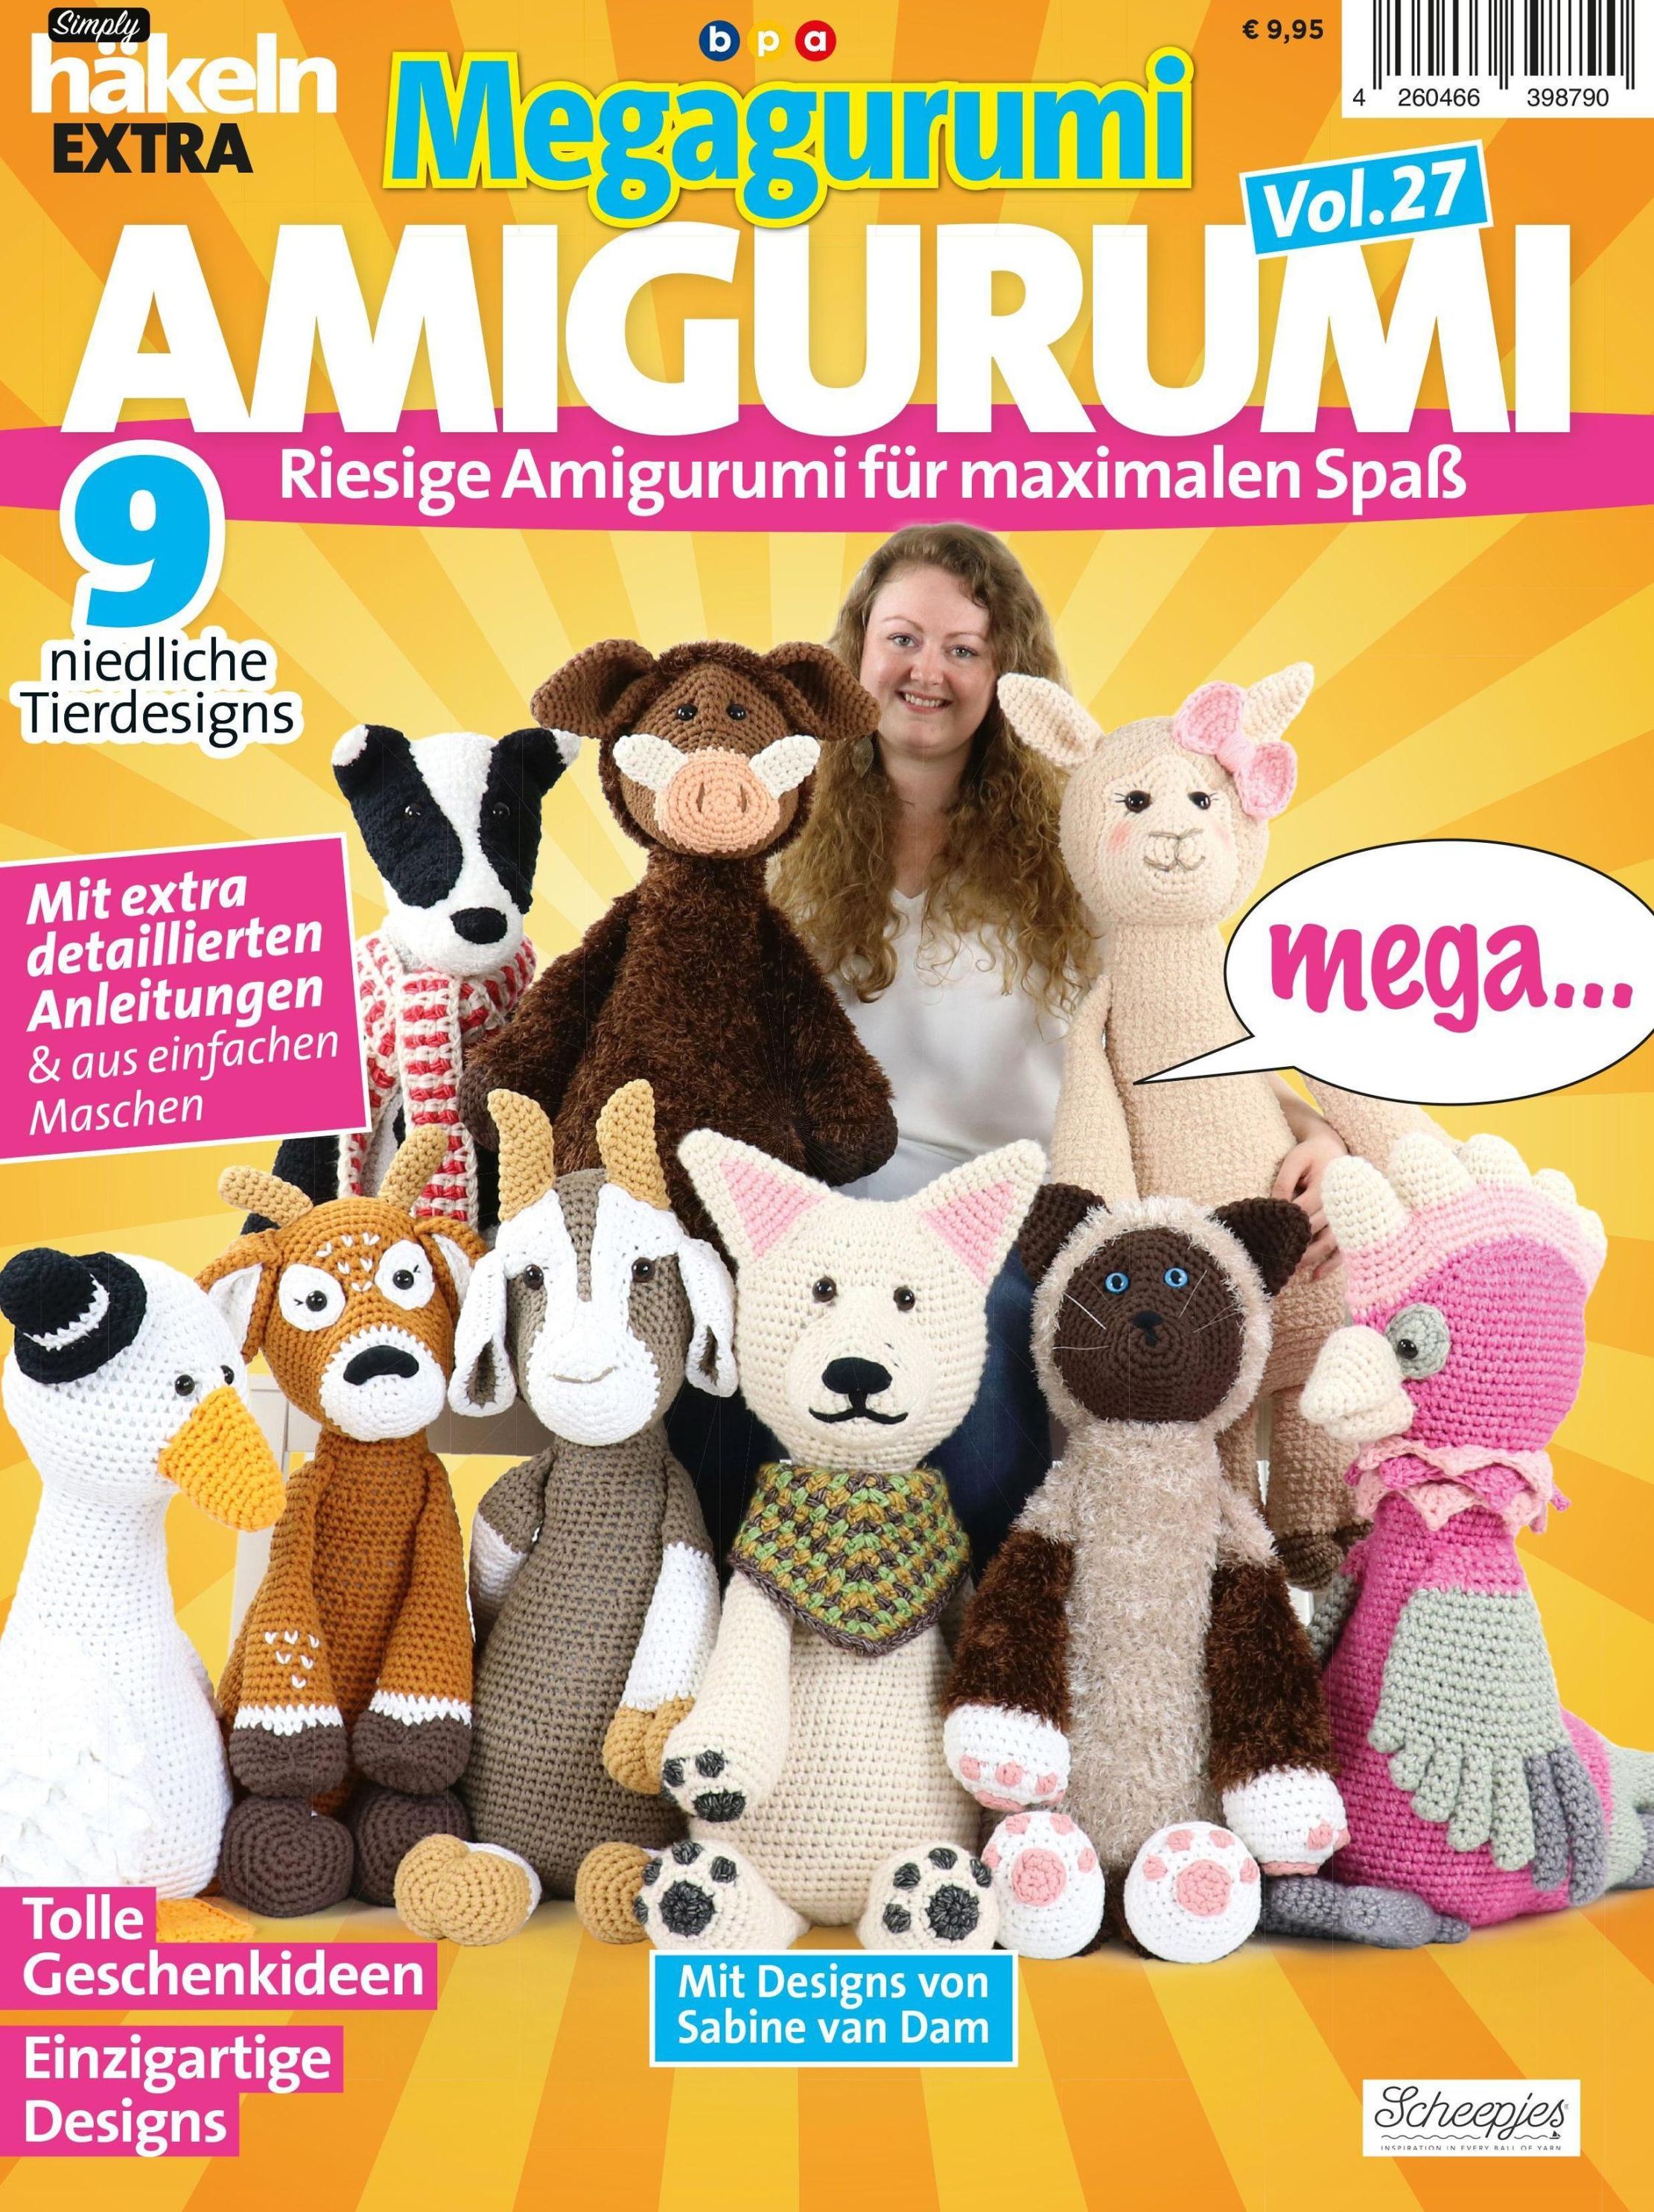 Simply Häkeln EXTRA: Megagurumi! AMIGURUMI Vol. 27 jetzt kaufen